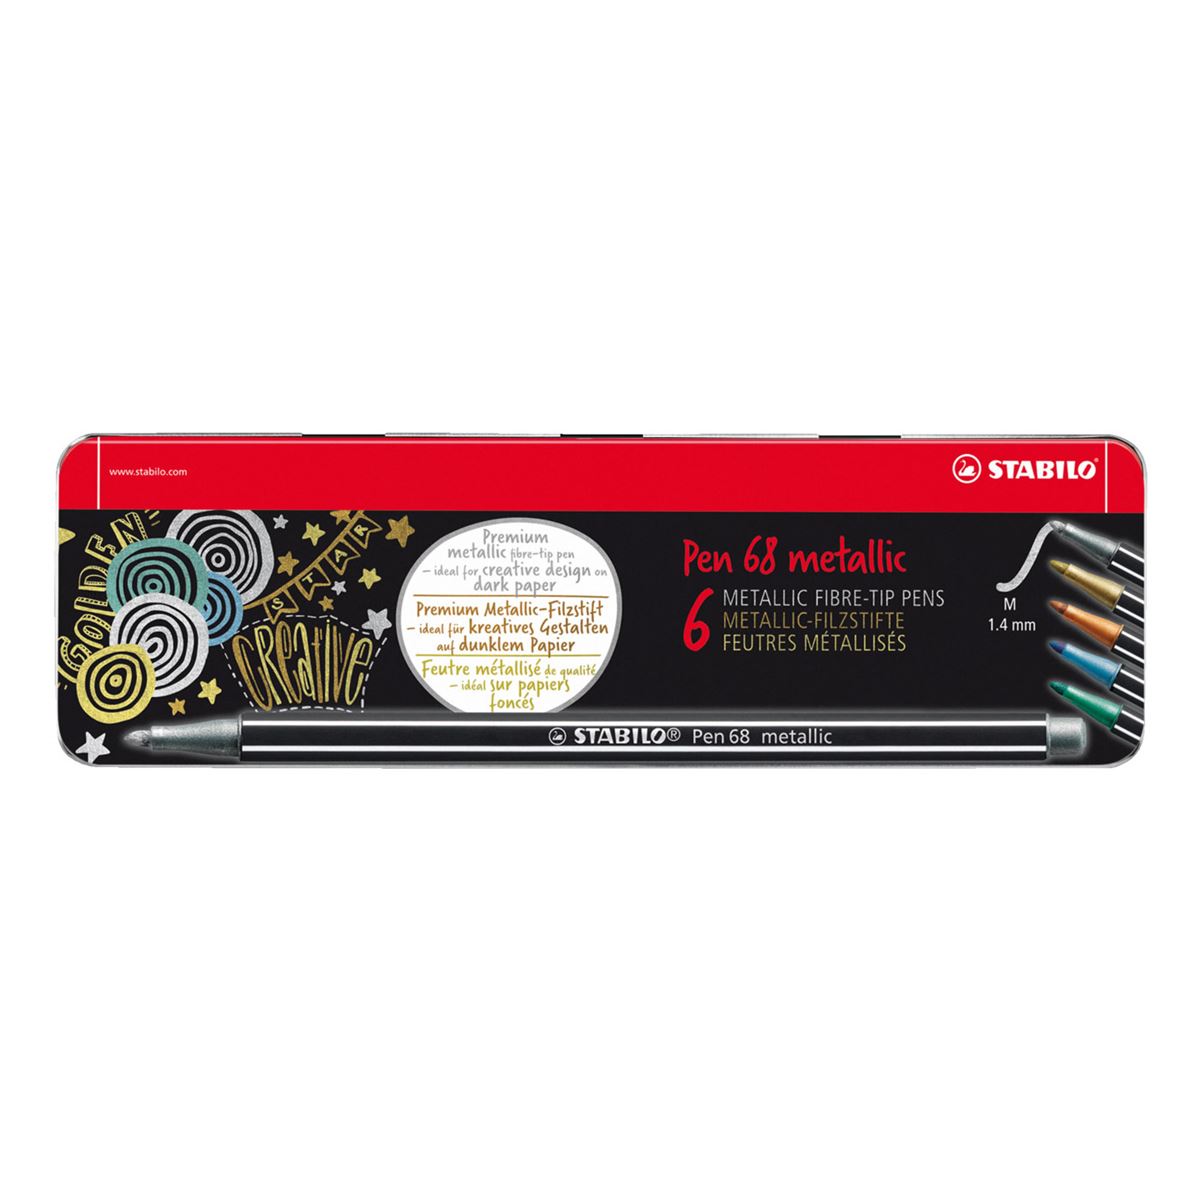 STABILO Pen 68 Metallic Felt Tips - Set of 6 - Tin Gift Case